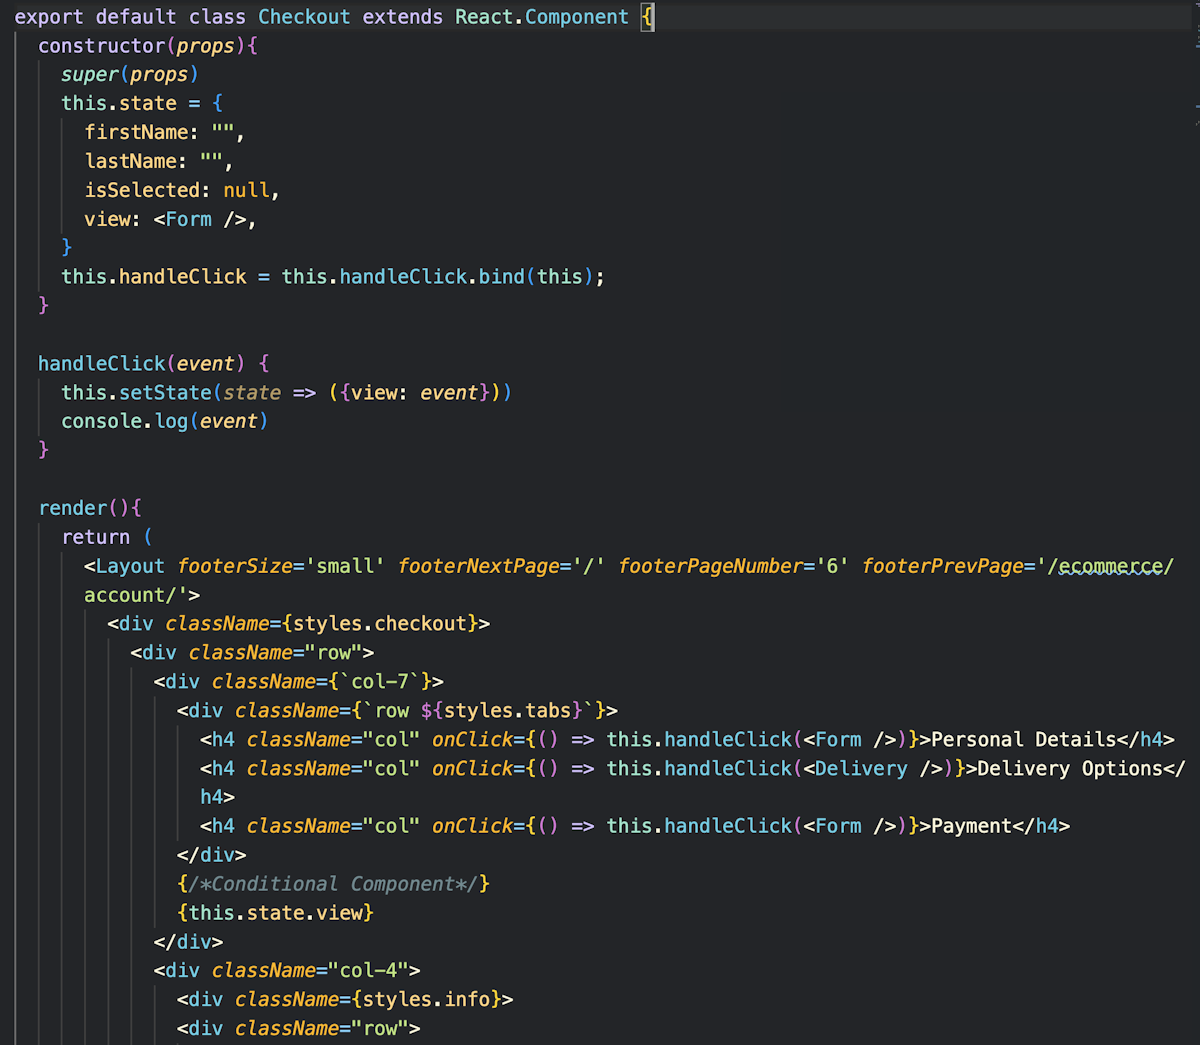 screenshot of code editor